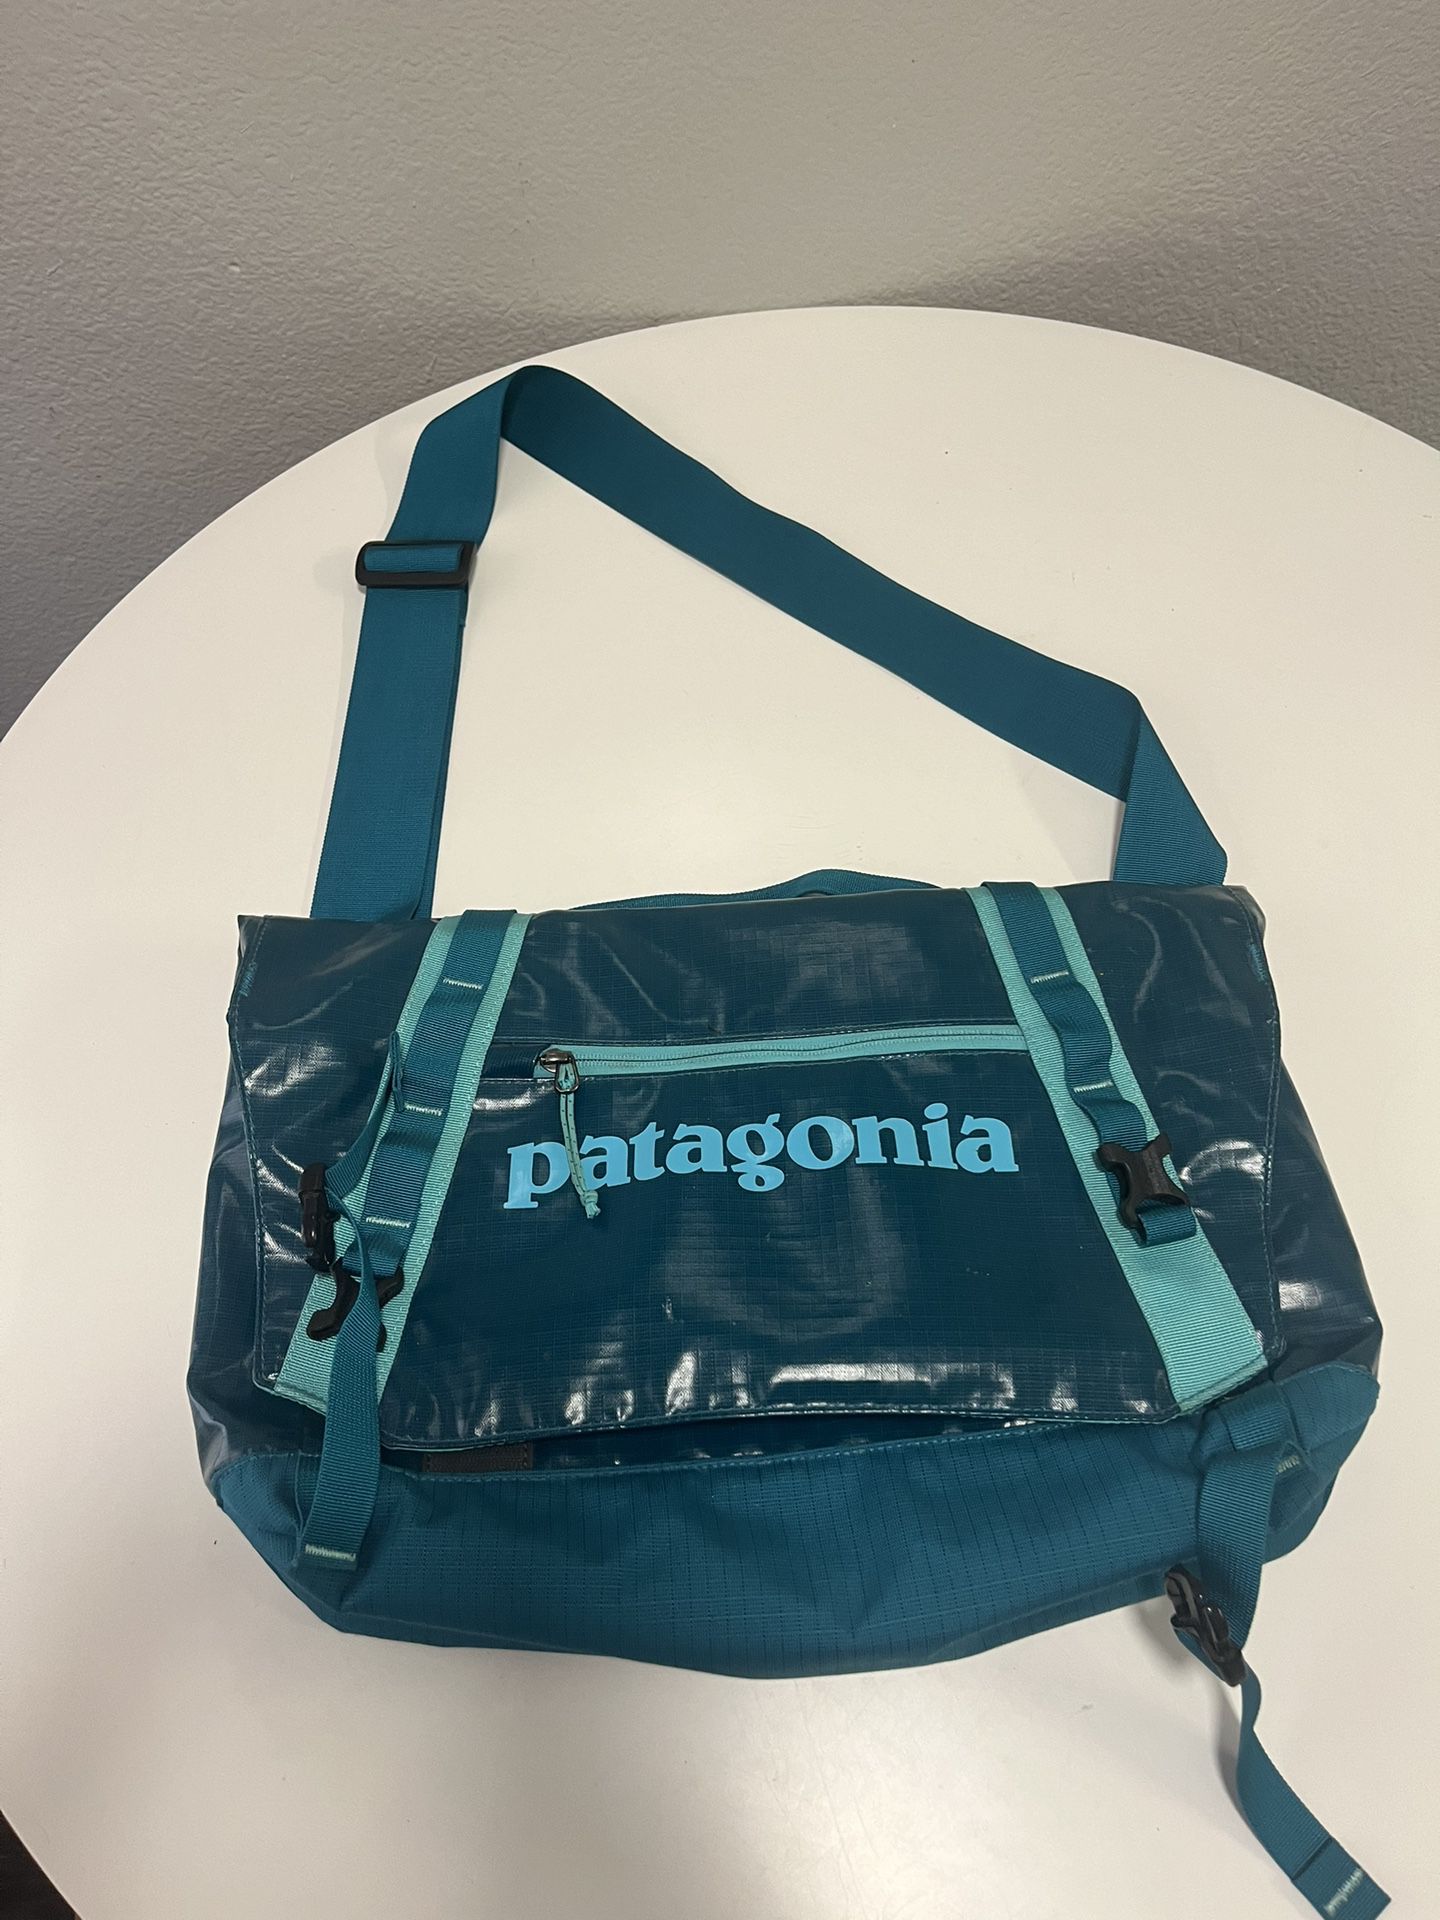 Patagonia Black Hole Messenger Bag Teal 